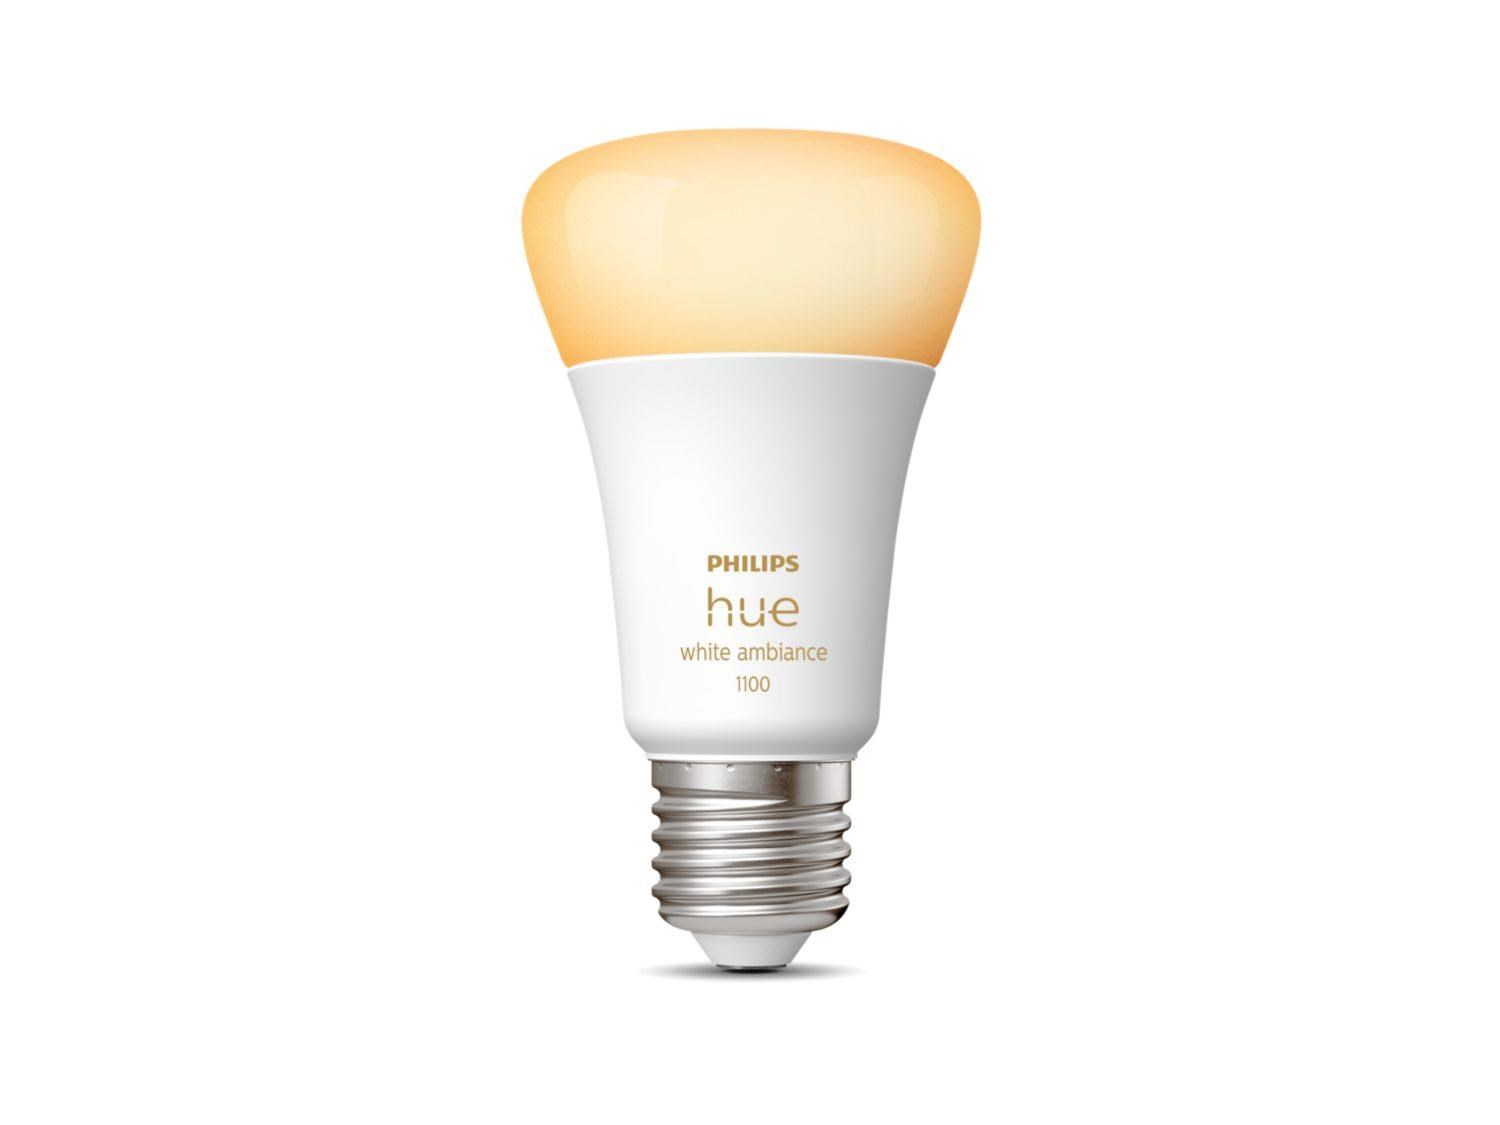 PHILIPS Hue White Ambiance 8W 1100 E27 - the bulb